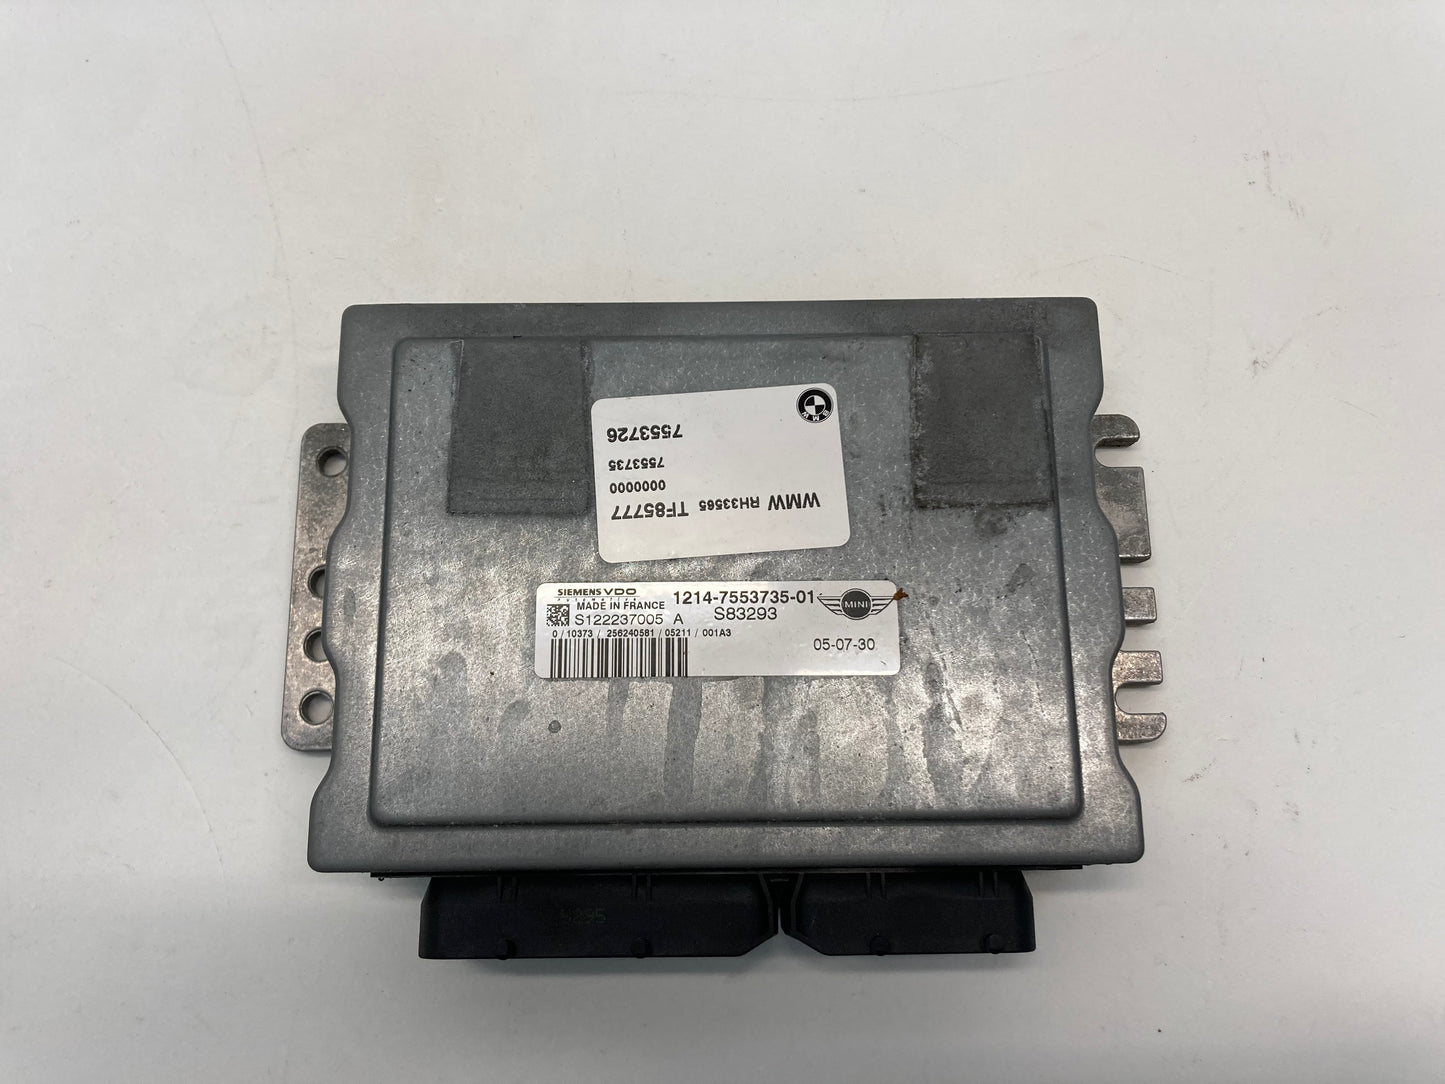 Mini Cooper S DME and Key Set Manual New Key W11 12147557395 05-08 R52 R53 425